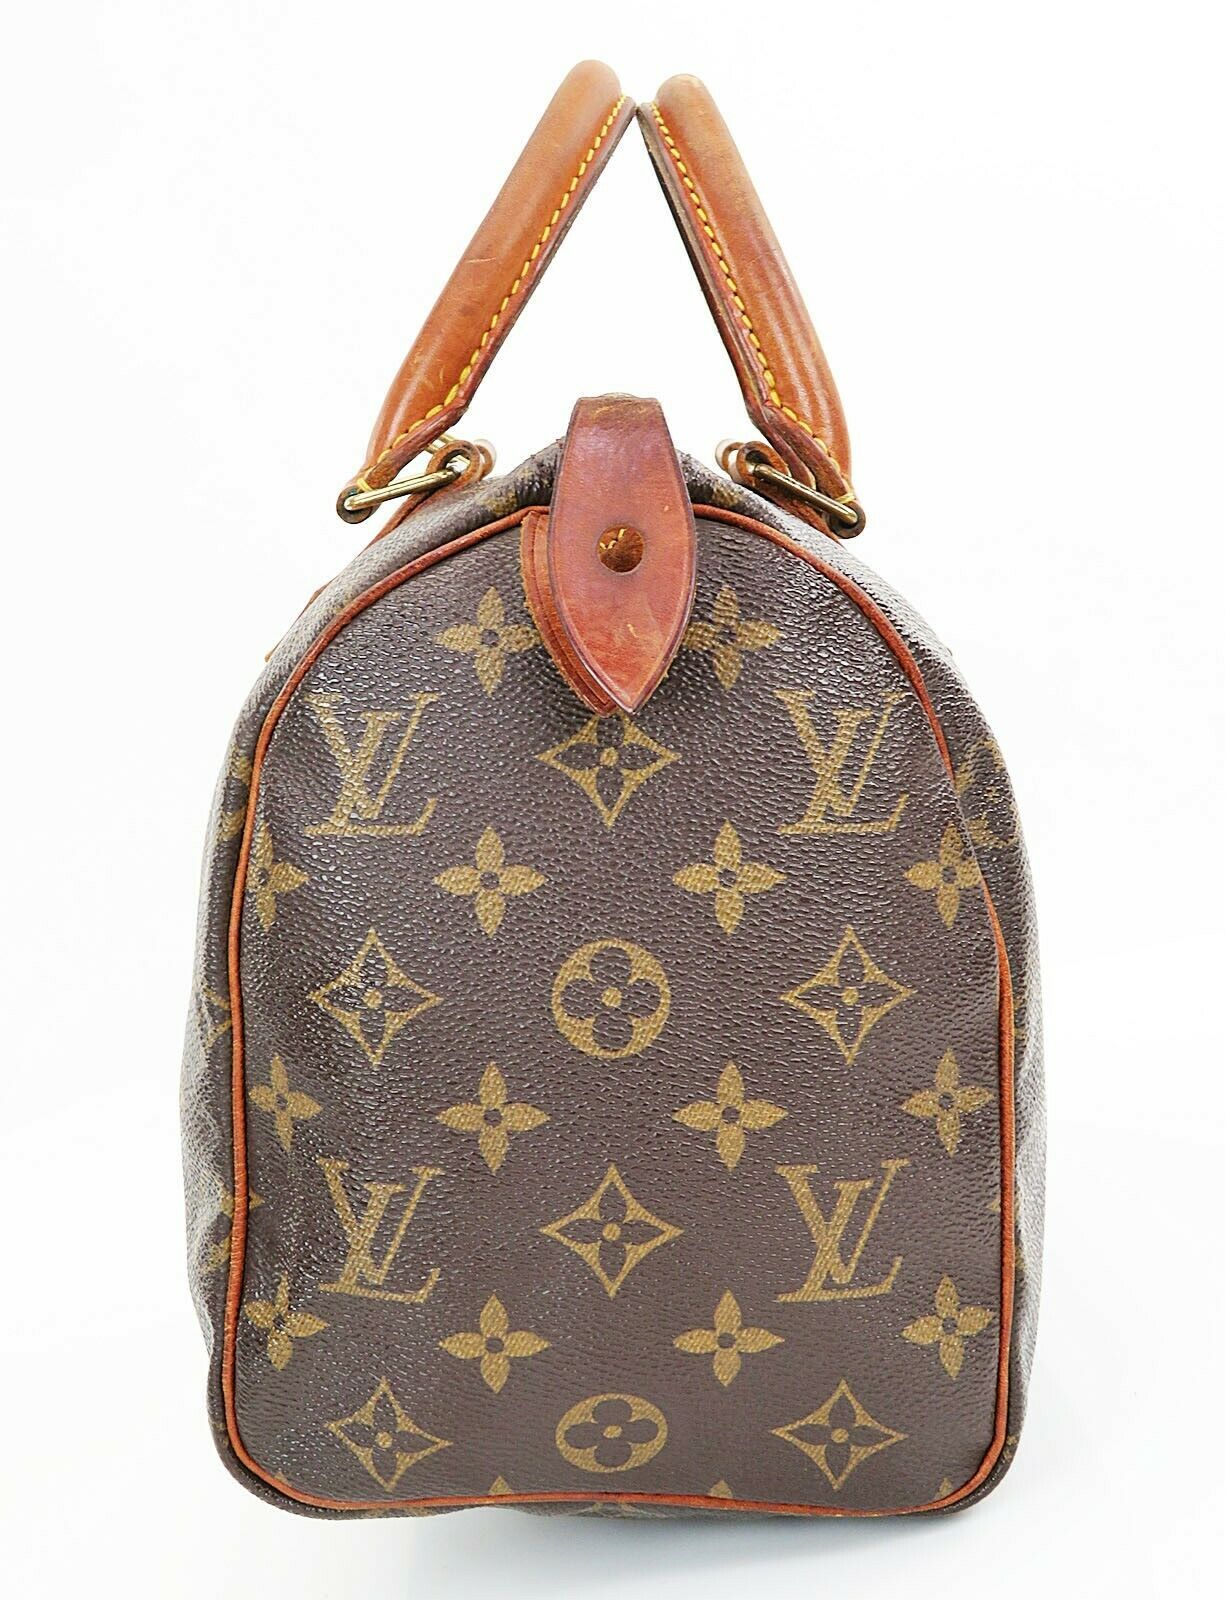 Authentic LOUIS VUITTON Speedy 25 Monogram Boston Handbag Purse #36327 - Women&#39;s Bags & Handbags